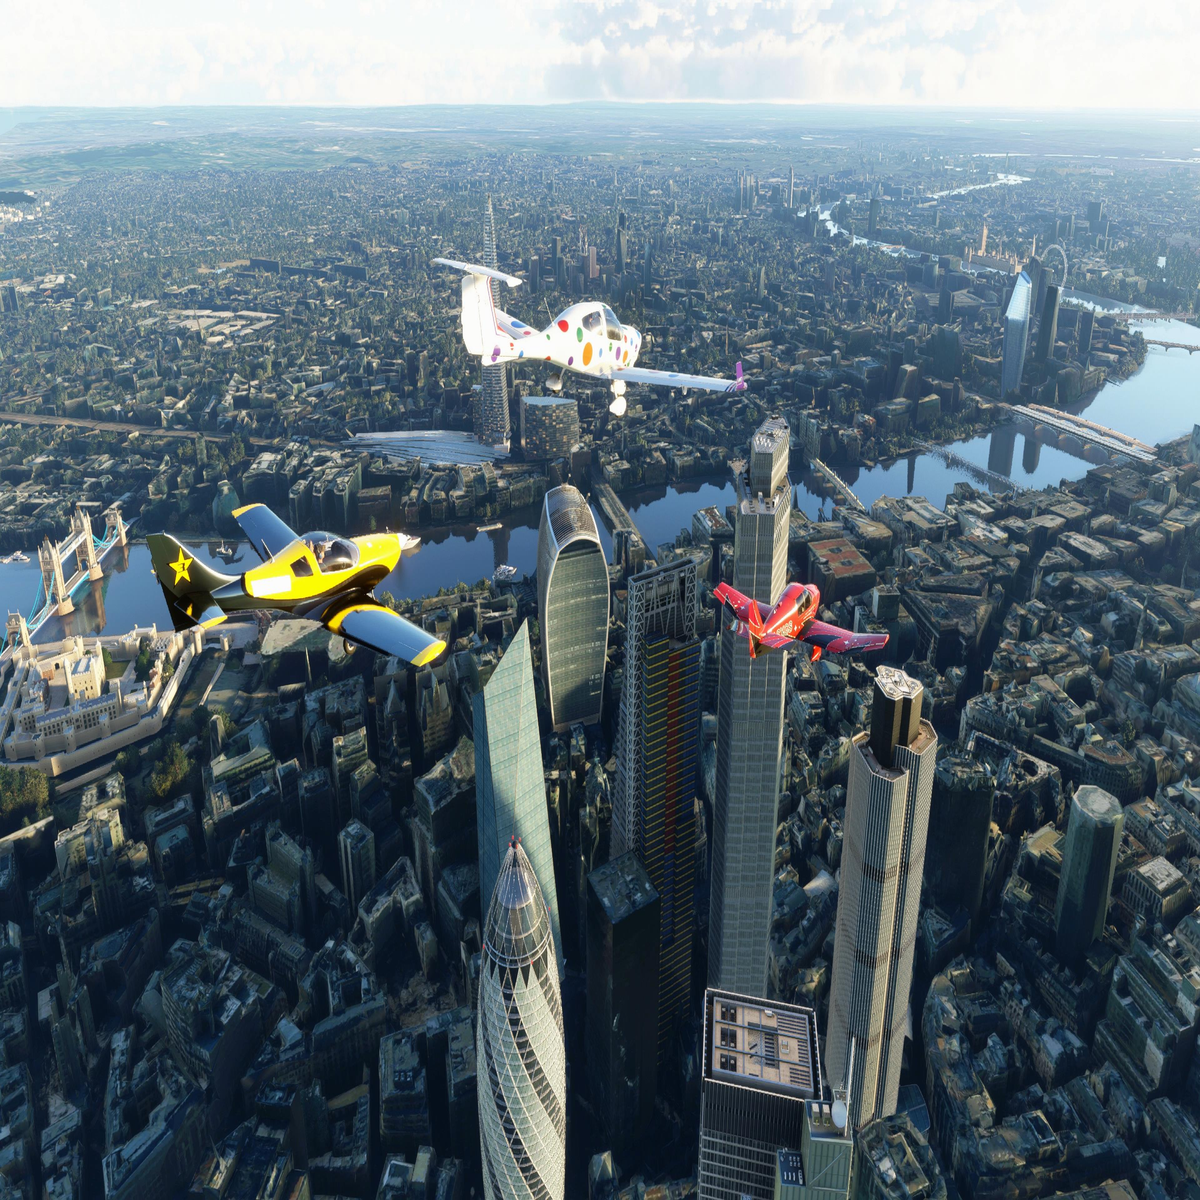 How Microsoft Flight Simulator 2020 Multiplayer Works - VR Flight World